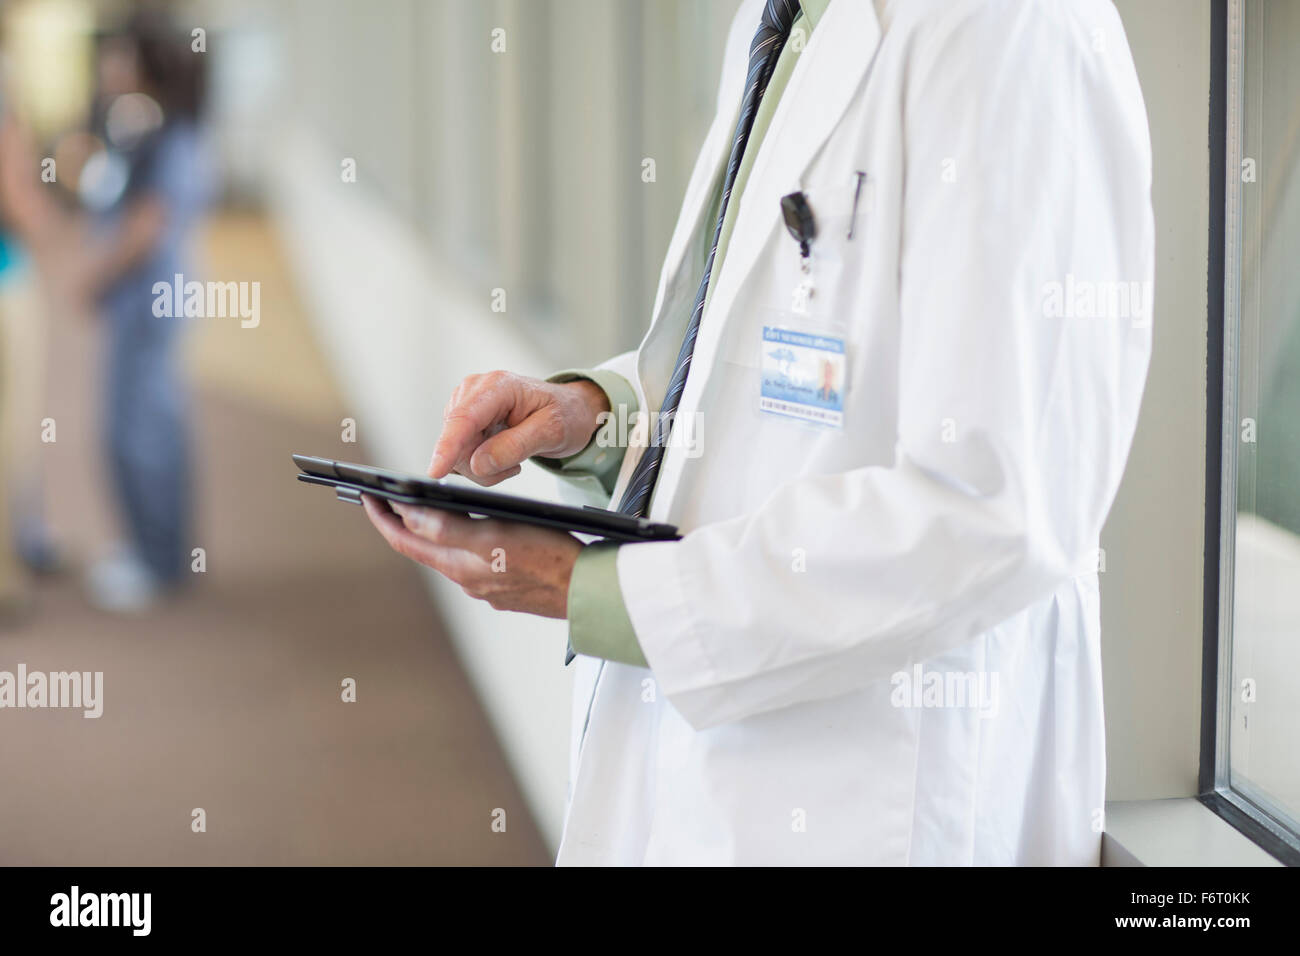 Doctor using digital tablet in hallway Banque D'Images